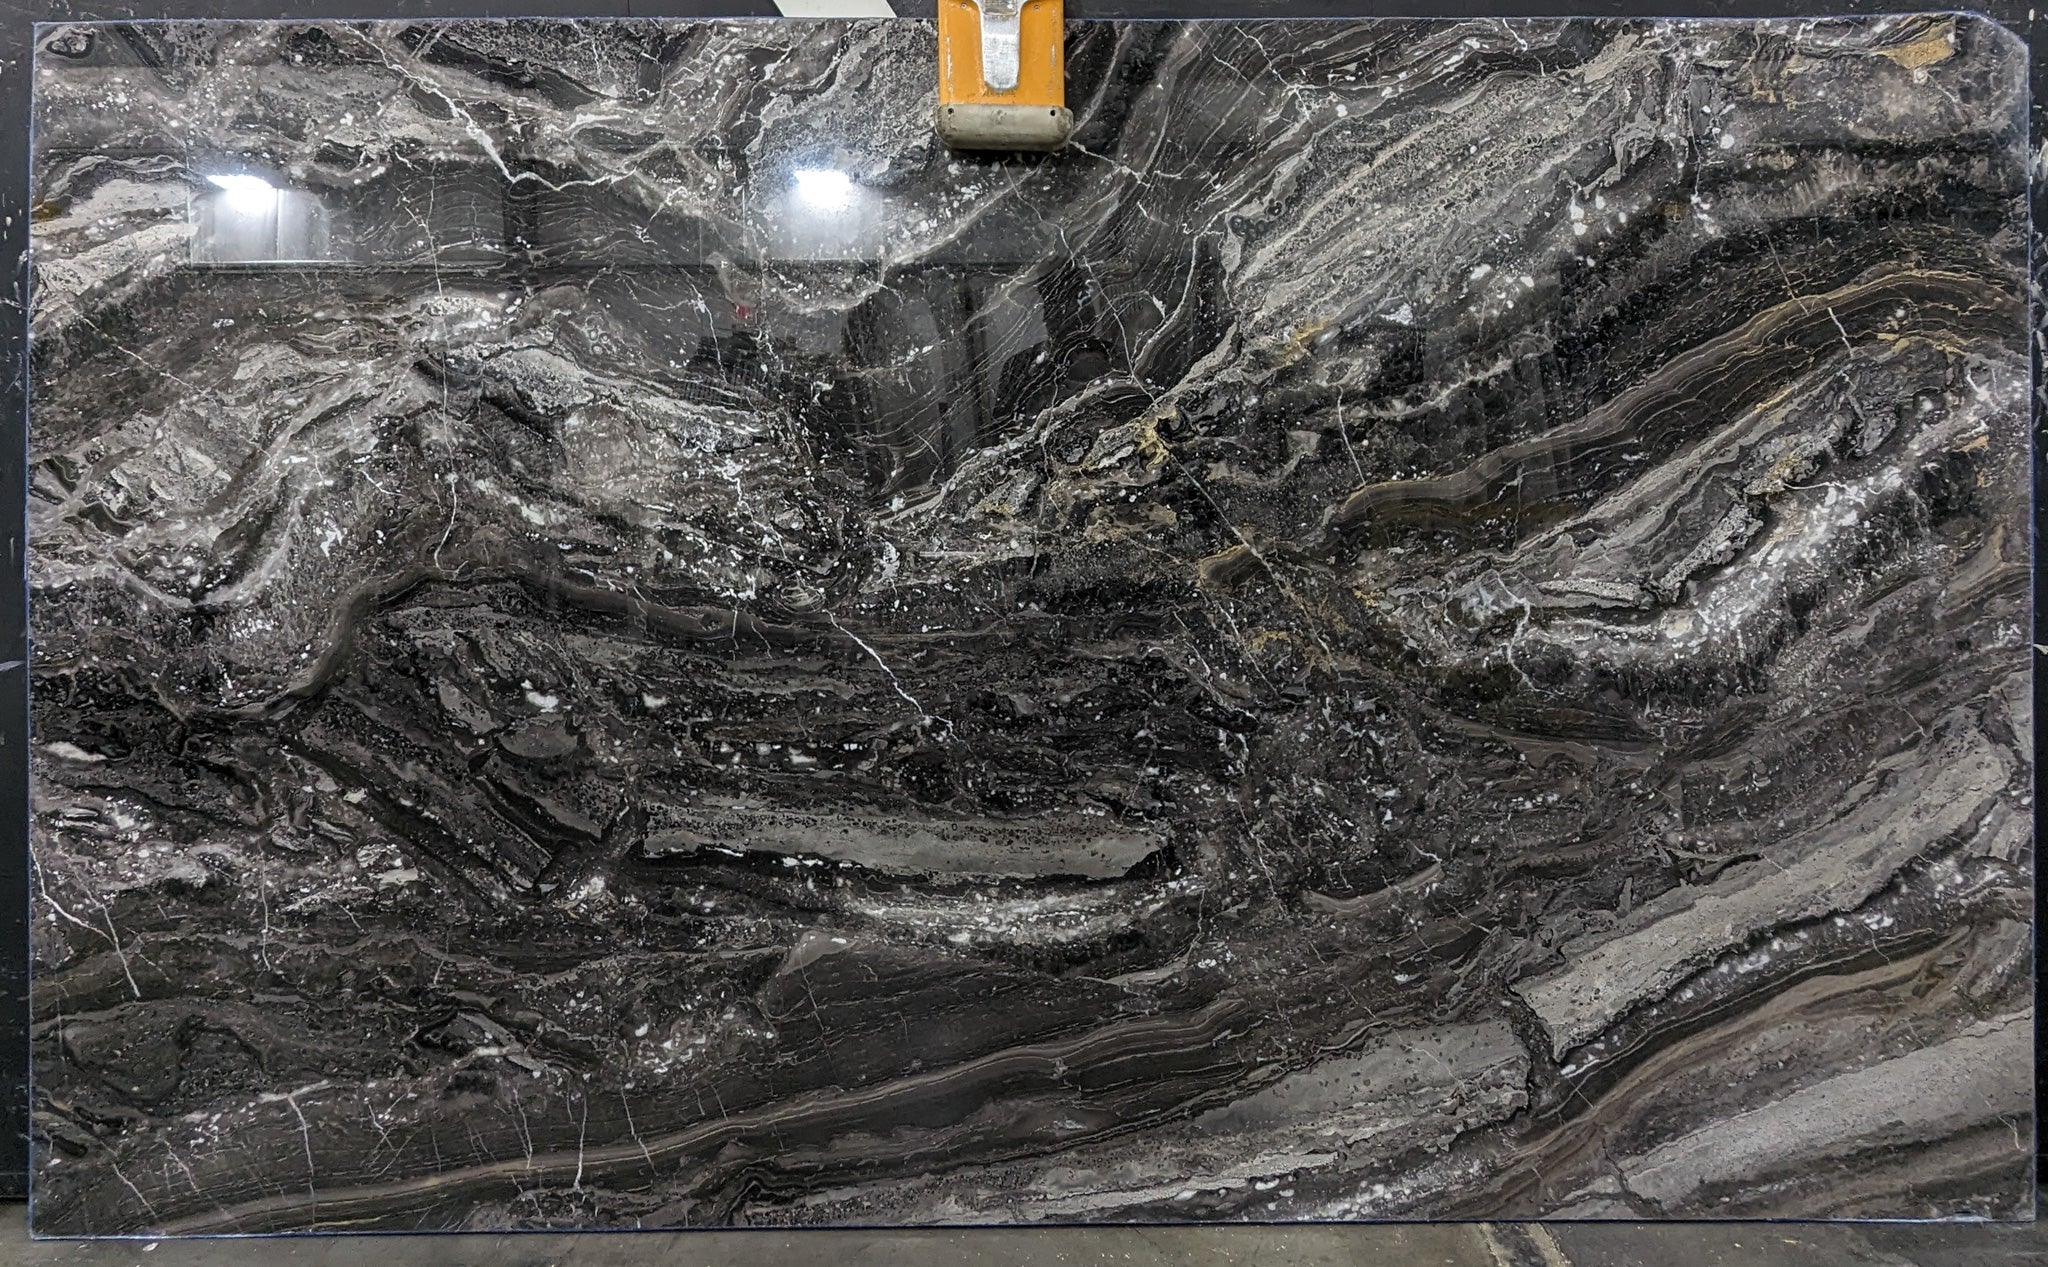  Arabescato Orobico Dark Marble Slab 3/4 - HYEQ#36 -  73x124 